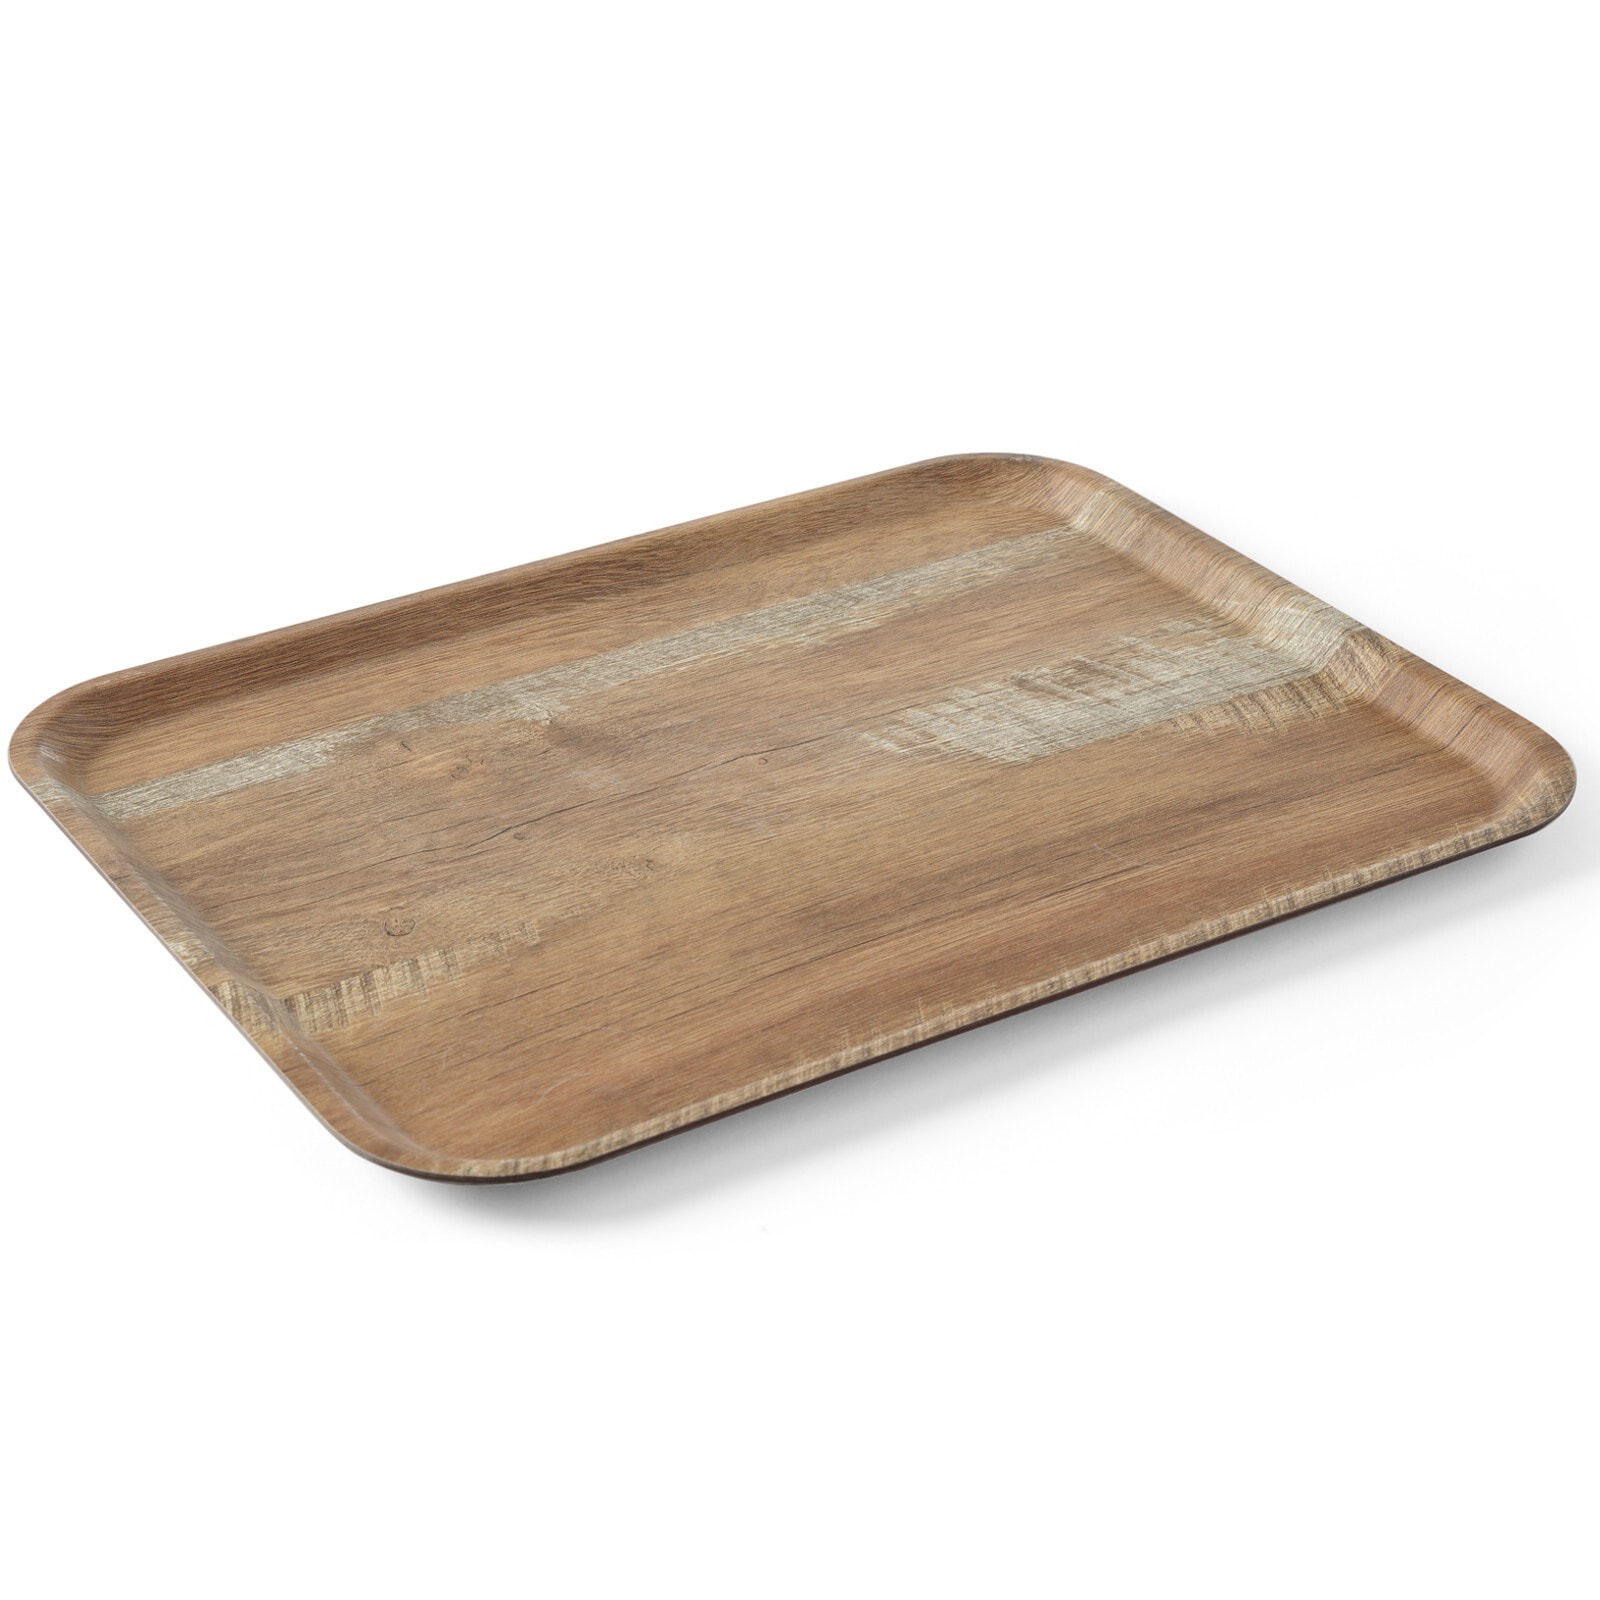 Tray serving tray with wood imprint, 240x350mm Hendi 508916 oak